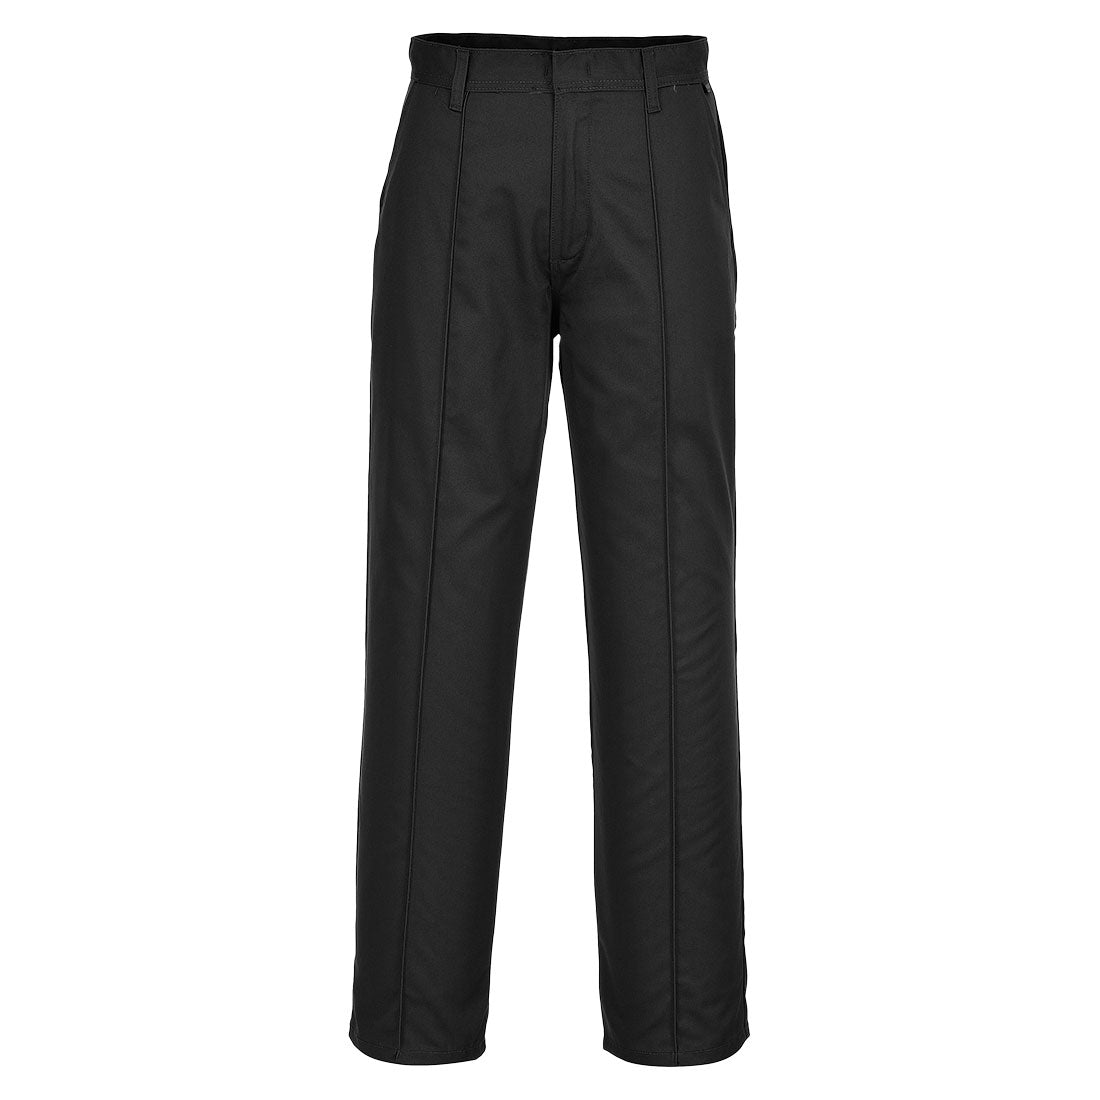 Portwest 2885 - Black Preston Mens Work Trousers with Side Pockets sz 28" Regular